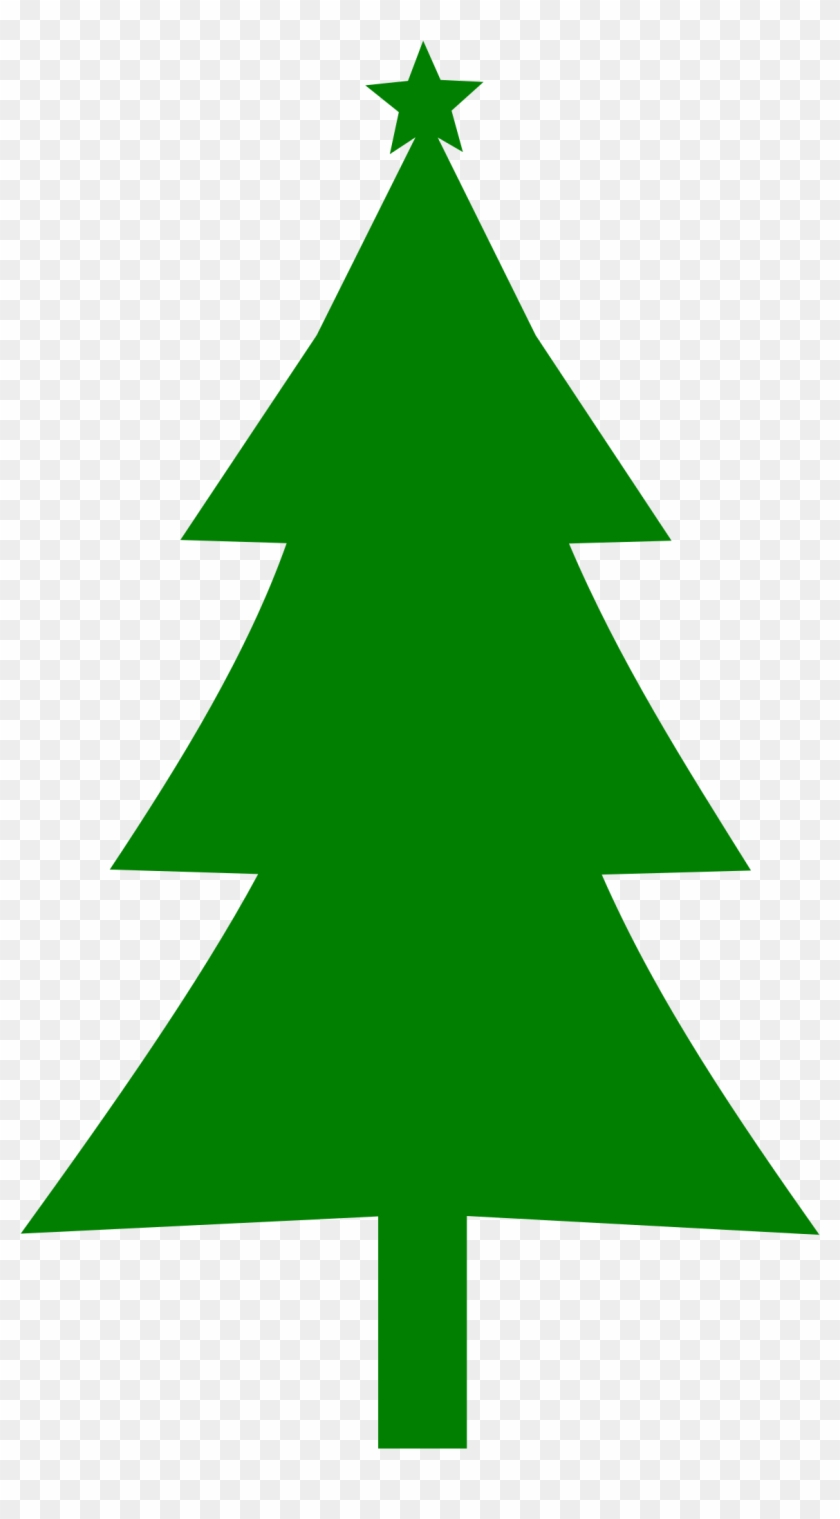 Christmas Tree Silhouette - Christmas Tree Silhouette Clip Art #952971